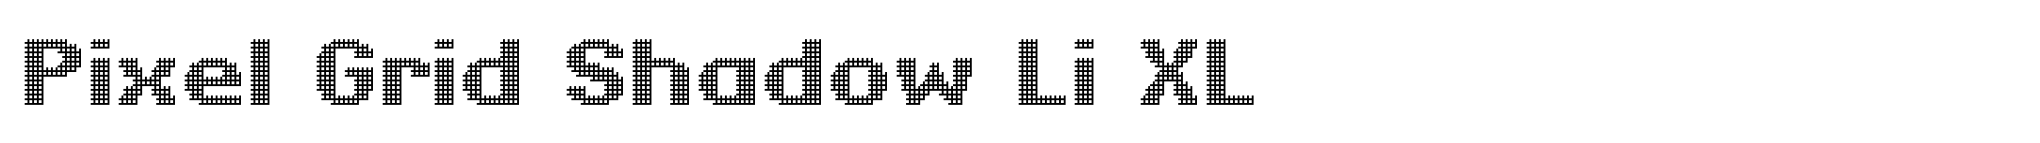 Pixel Grid Shadow Li XL image